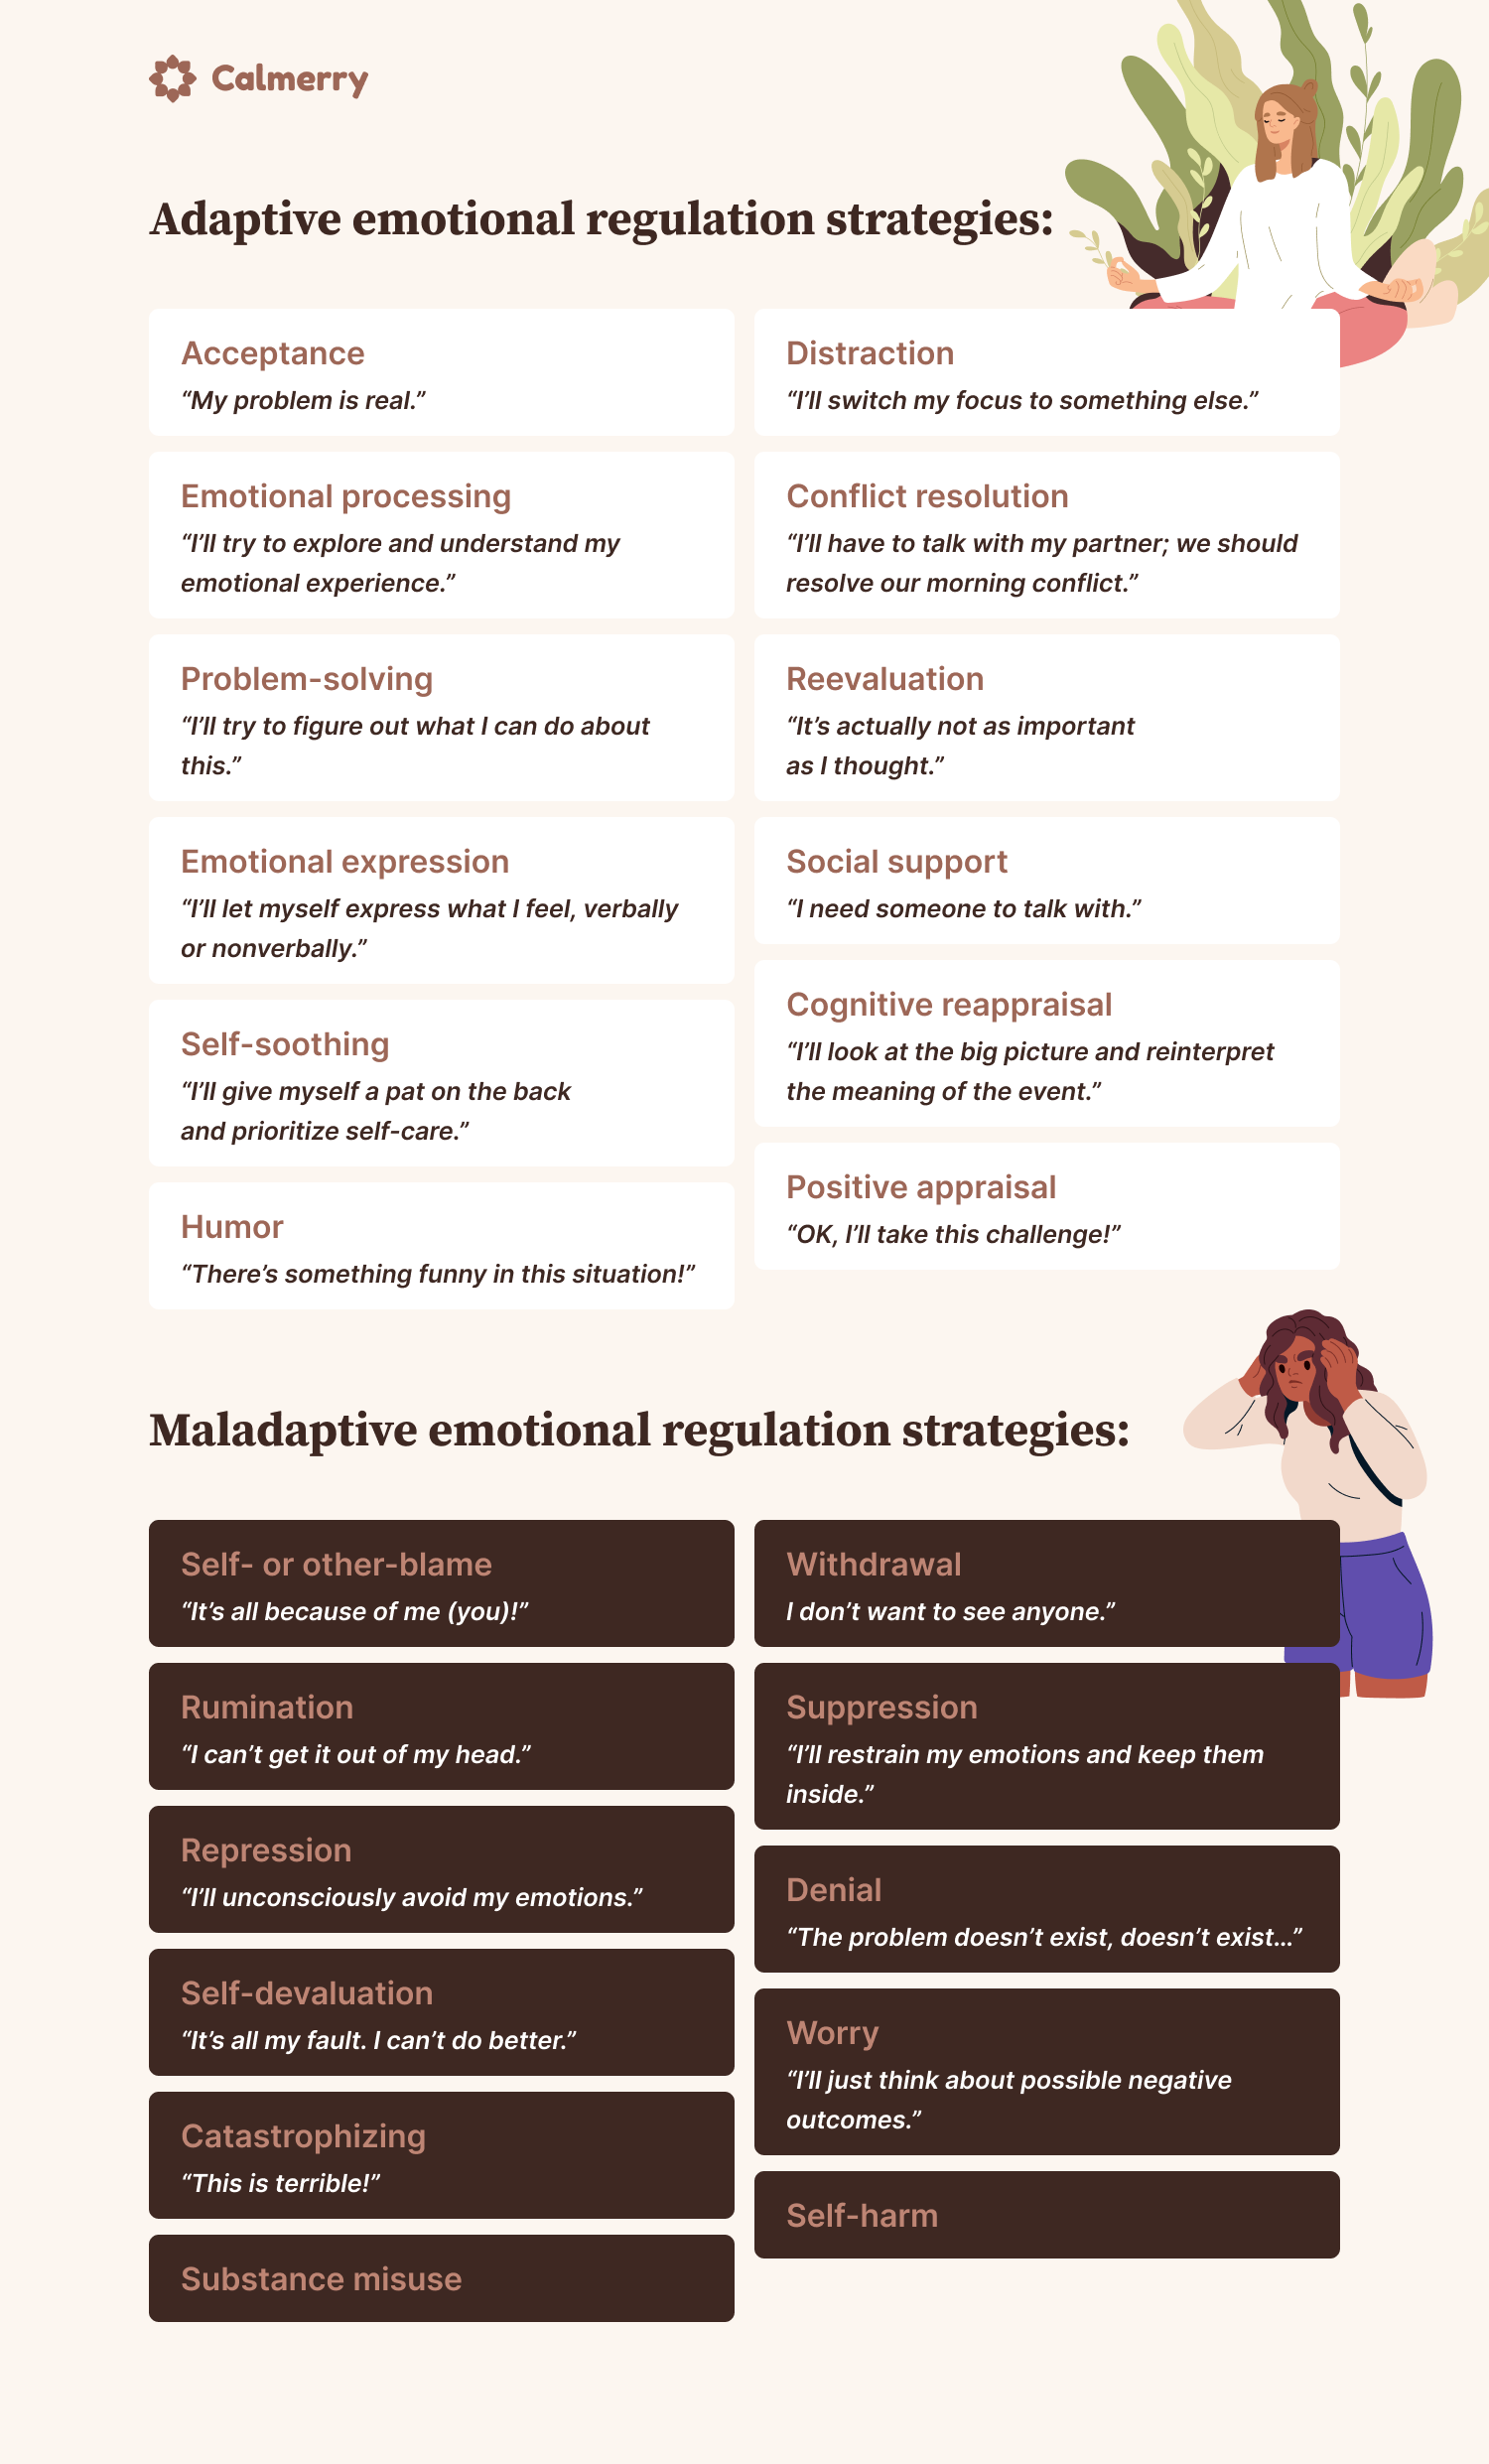 Adaptive vs. maladaptive emotional regulation strategies table